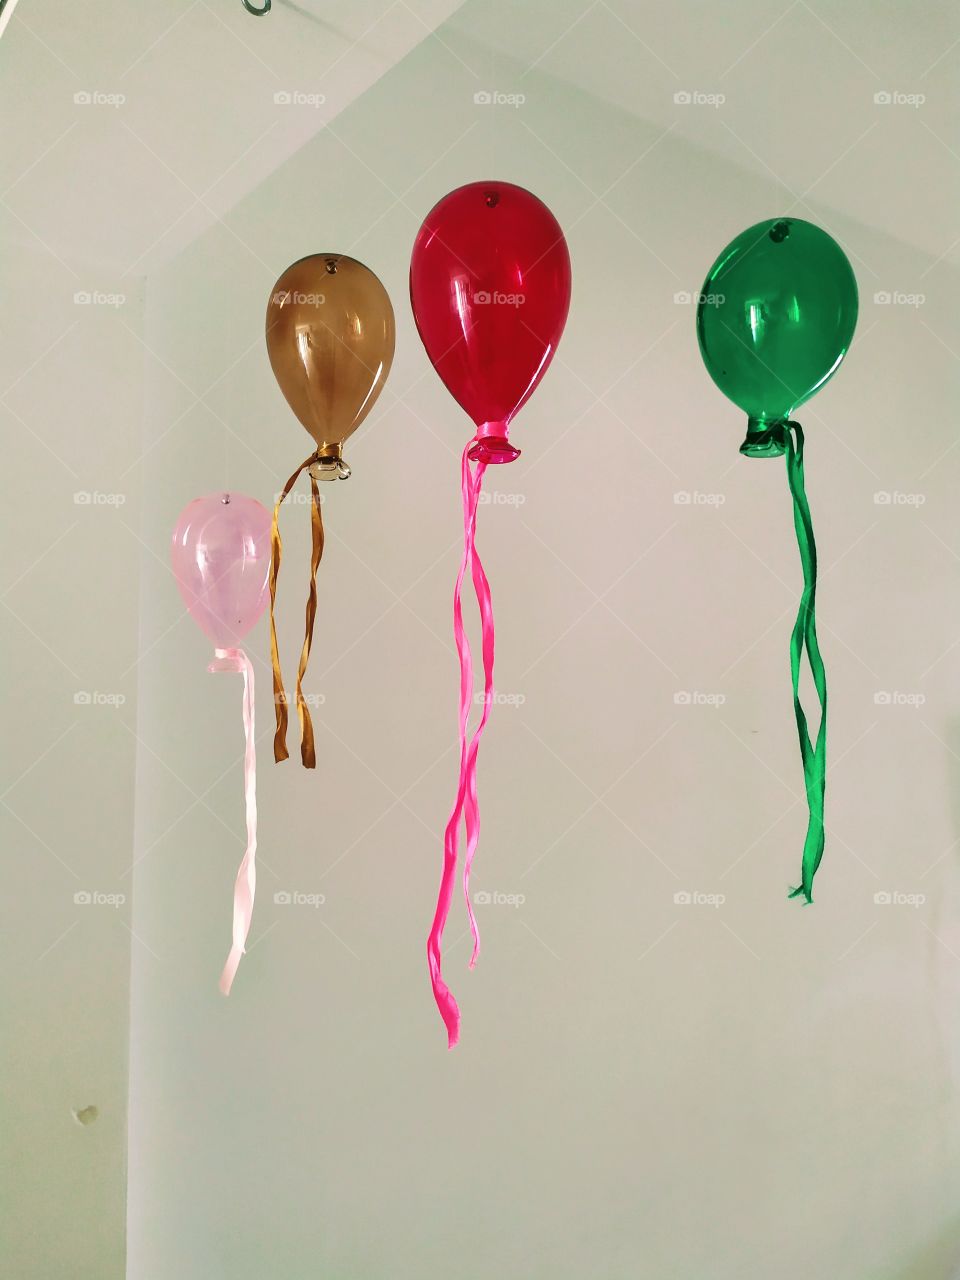 #balloons #glass #mdinaglass #malta